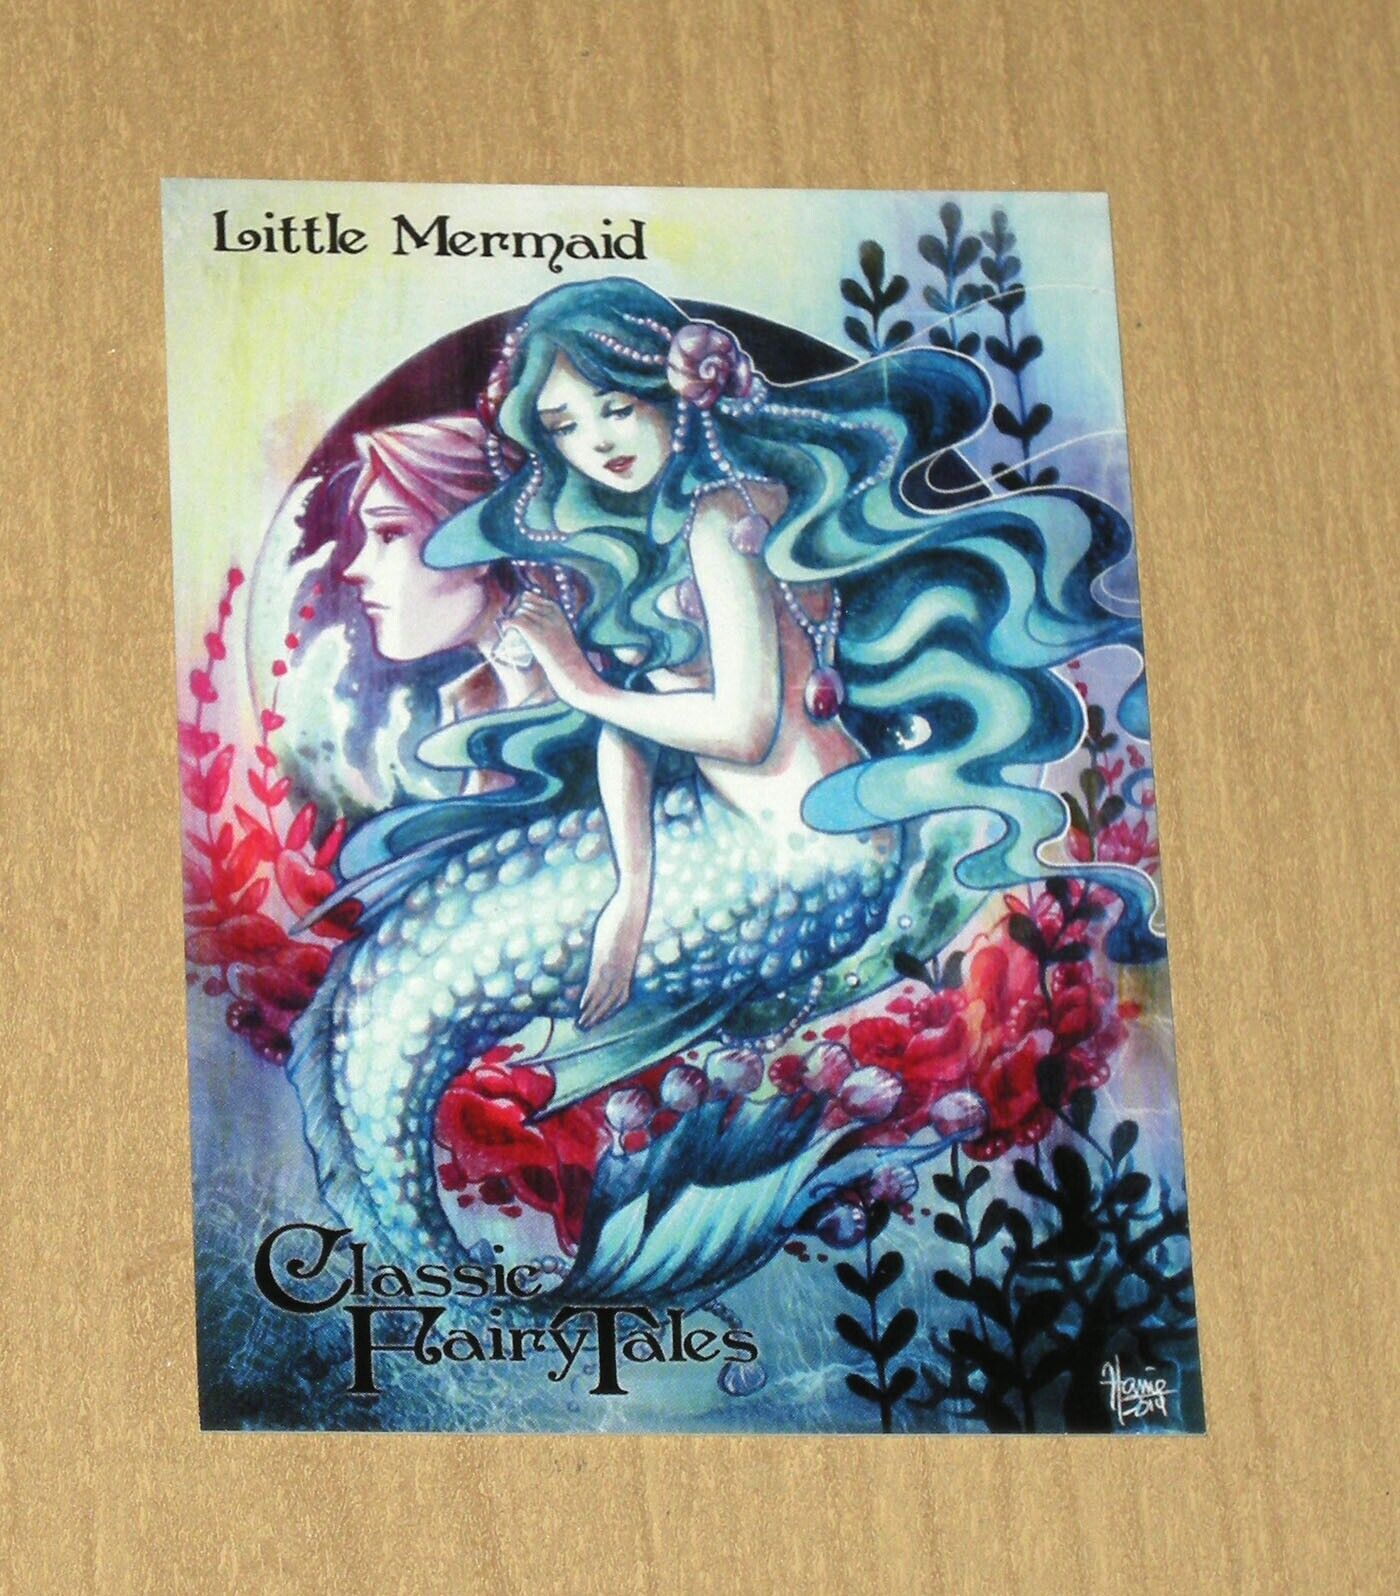 2014 Perna Classic Fairy Tales promo chase card SP3 Little Mermaid Hanie Mohd